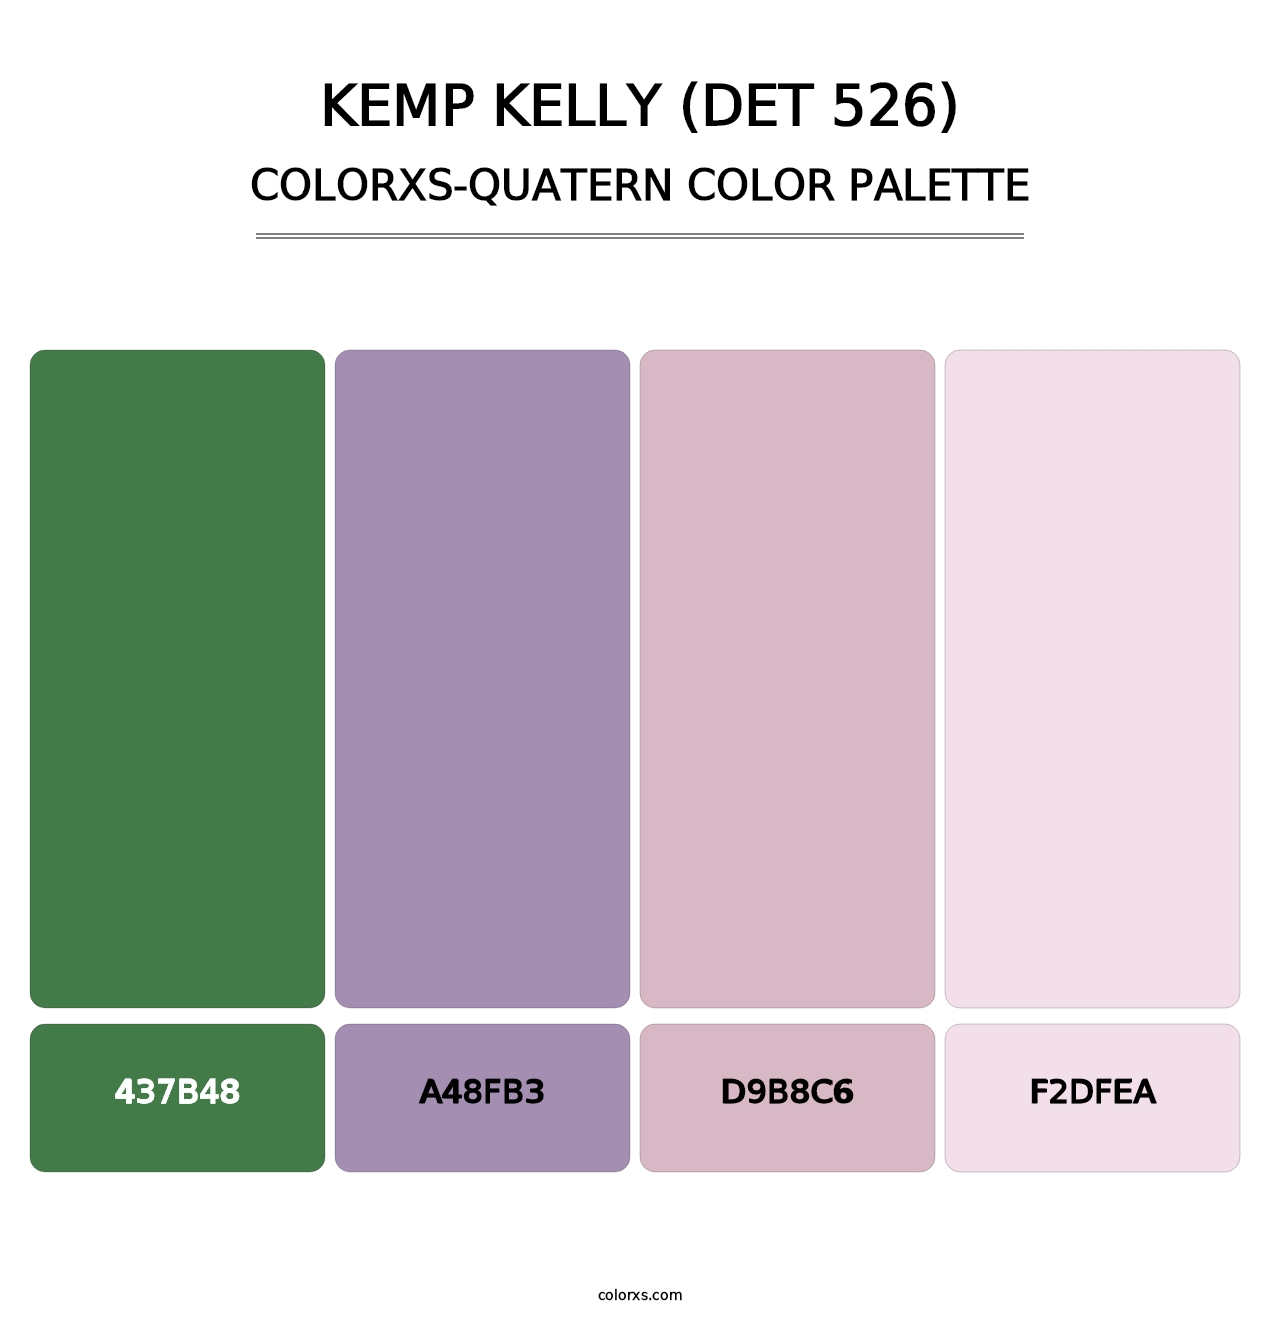 Kemp Kelly (DET 526) - Colorxs Quatern Palette